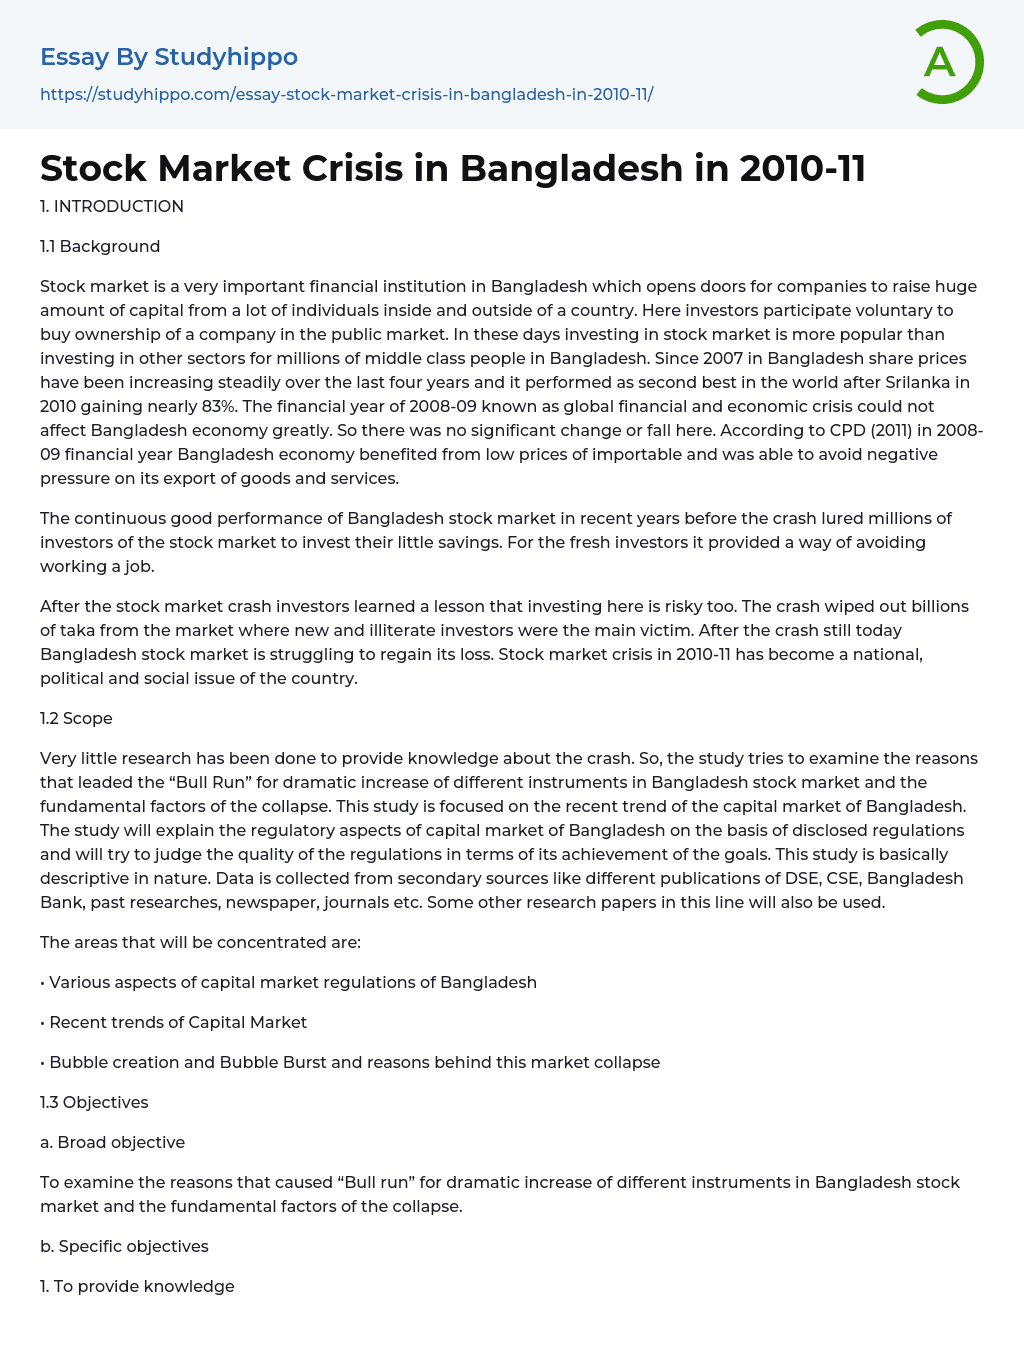 Stock Market Crisis in Bangladesh in 2010-11 Essay Example